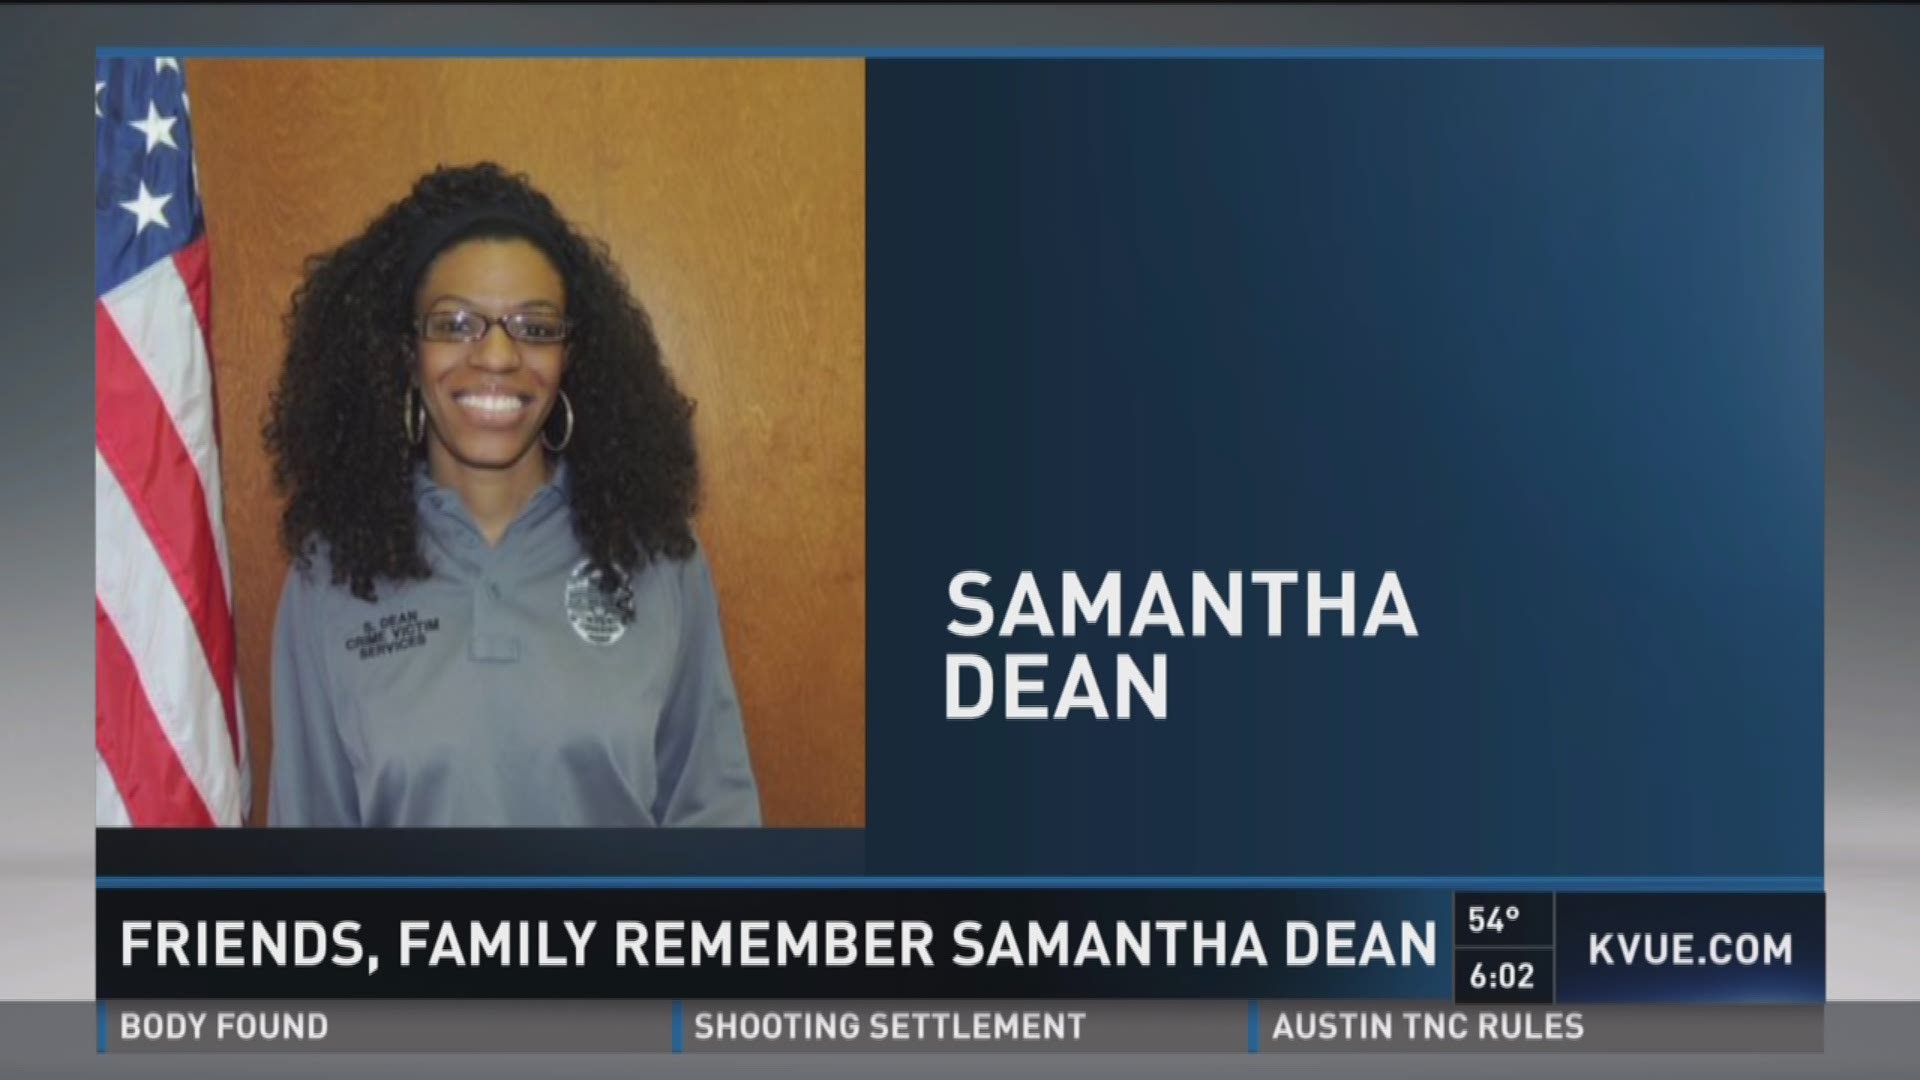 Friends, family remember Samantha Dean